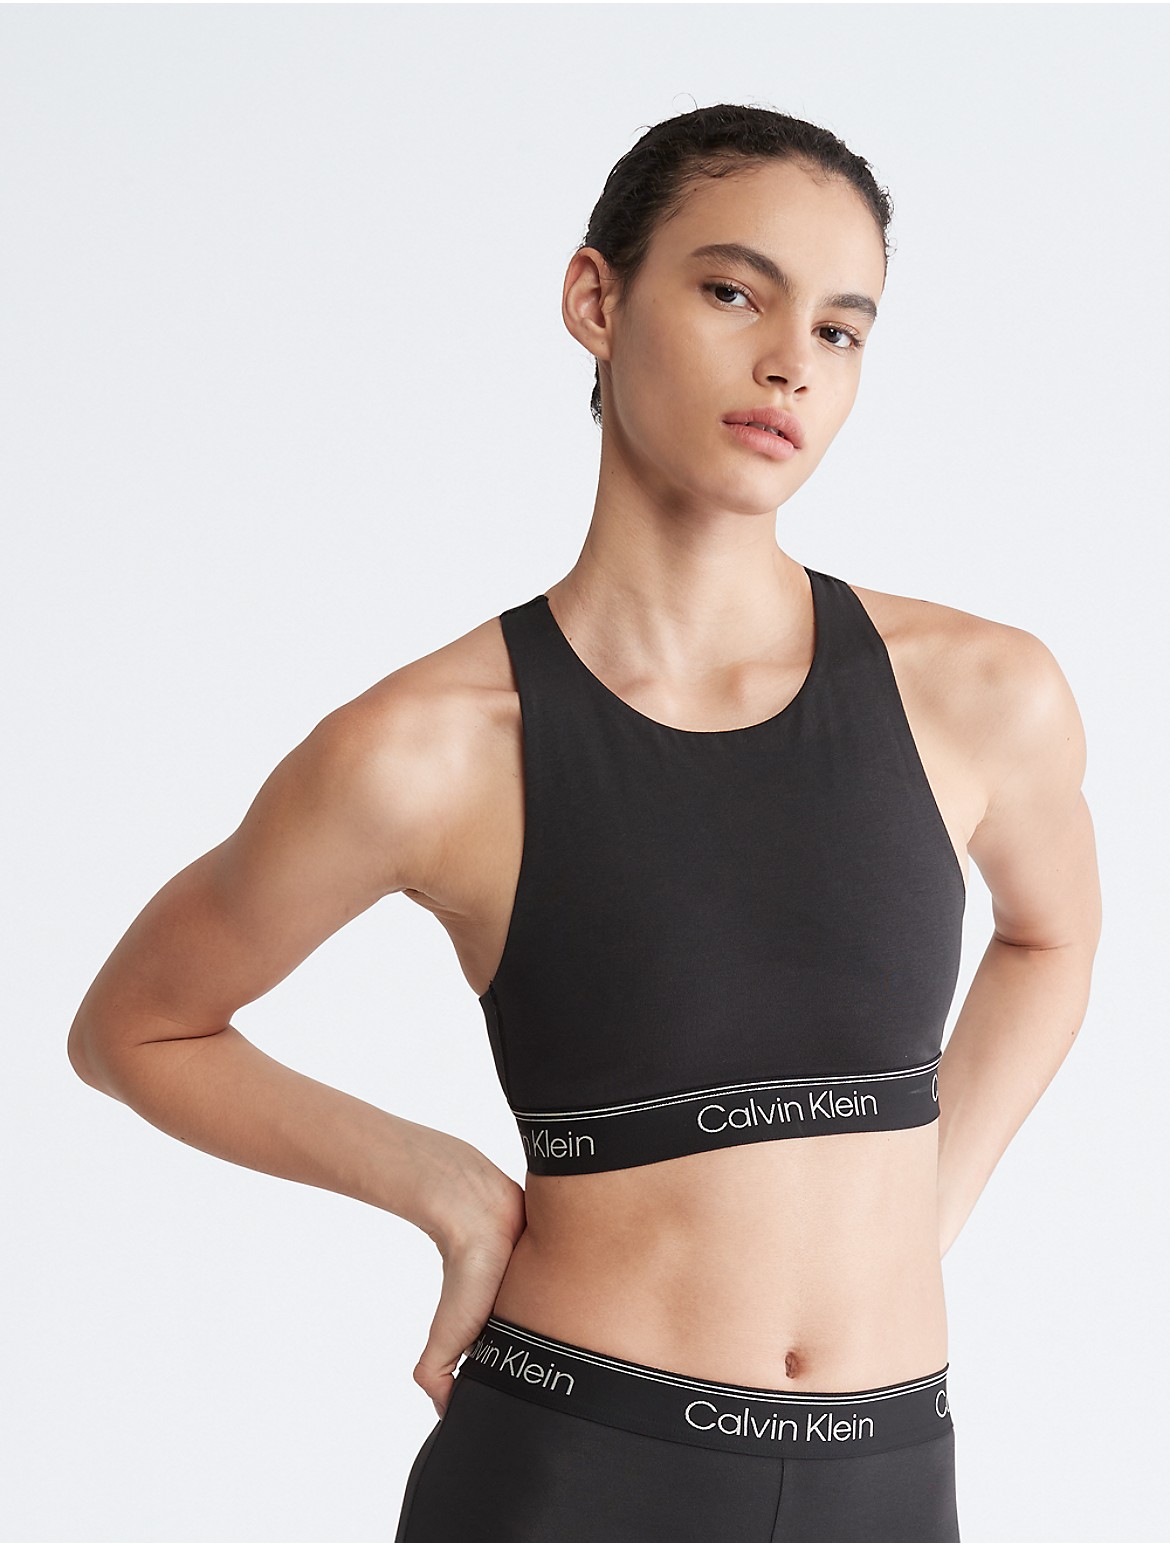 Calvin Klein Women's Calvin Klein Athletic Unlined Bralette - Black - S